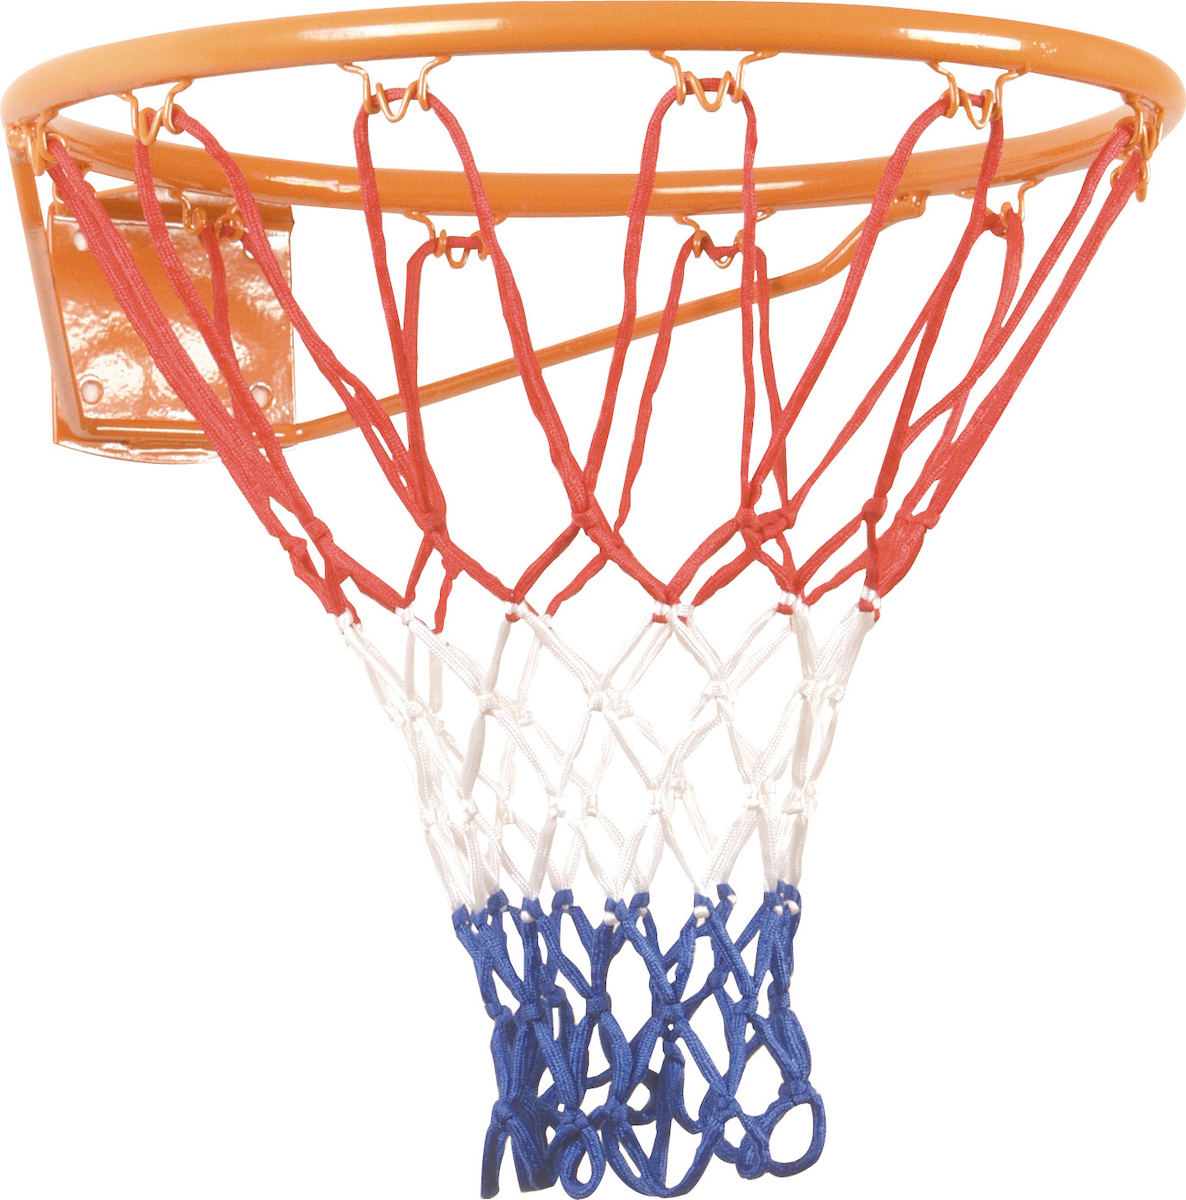 HUDORA Outdoor-Basketball hoop with net 71700